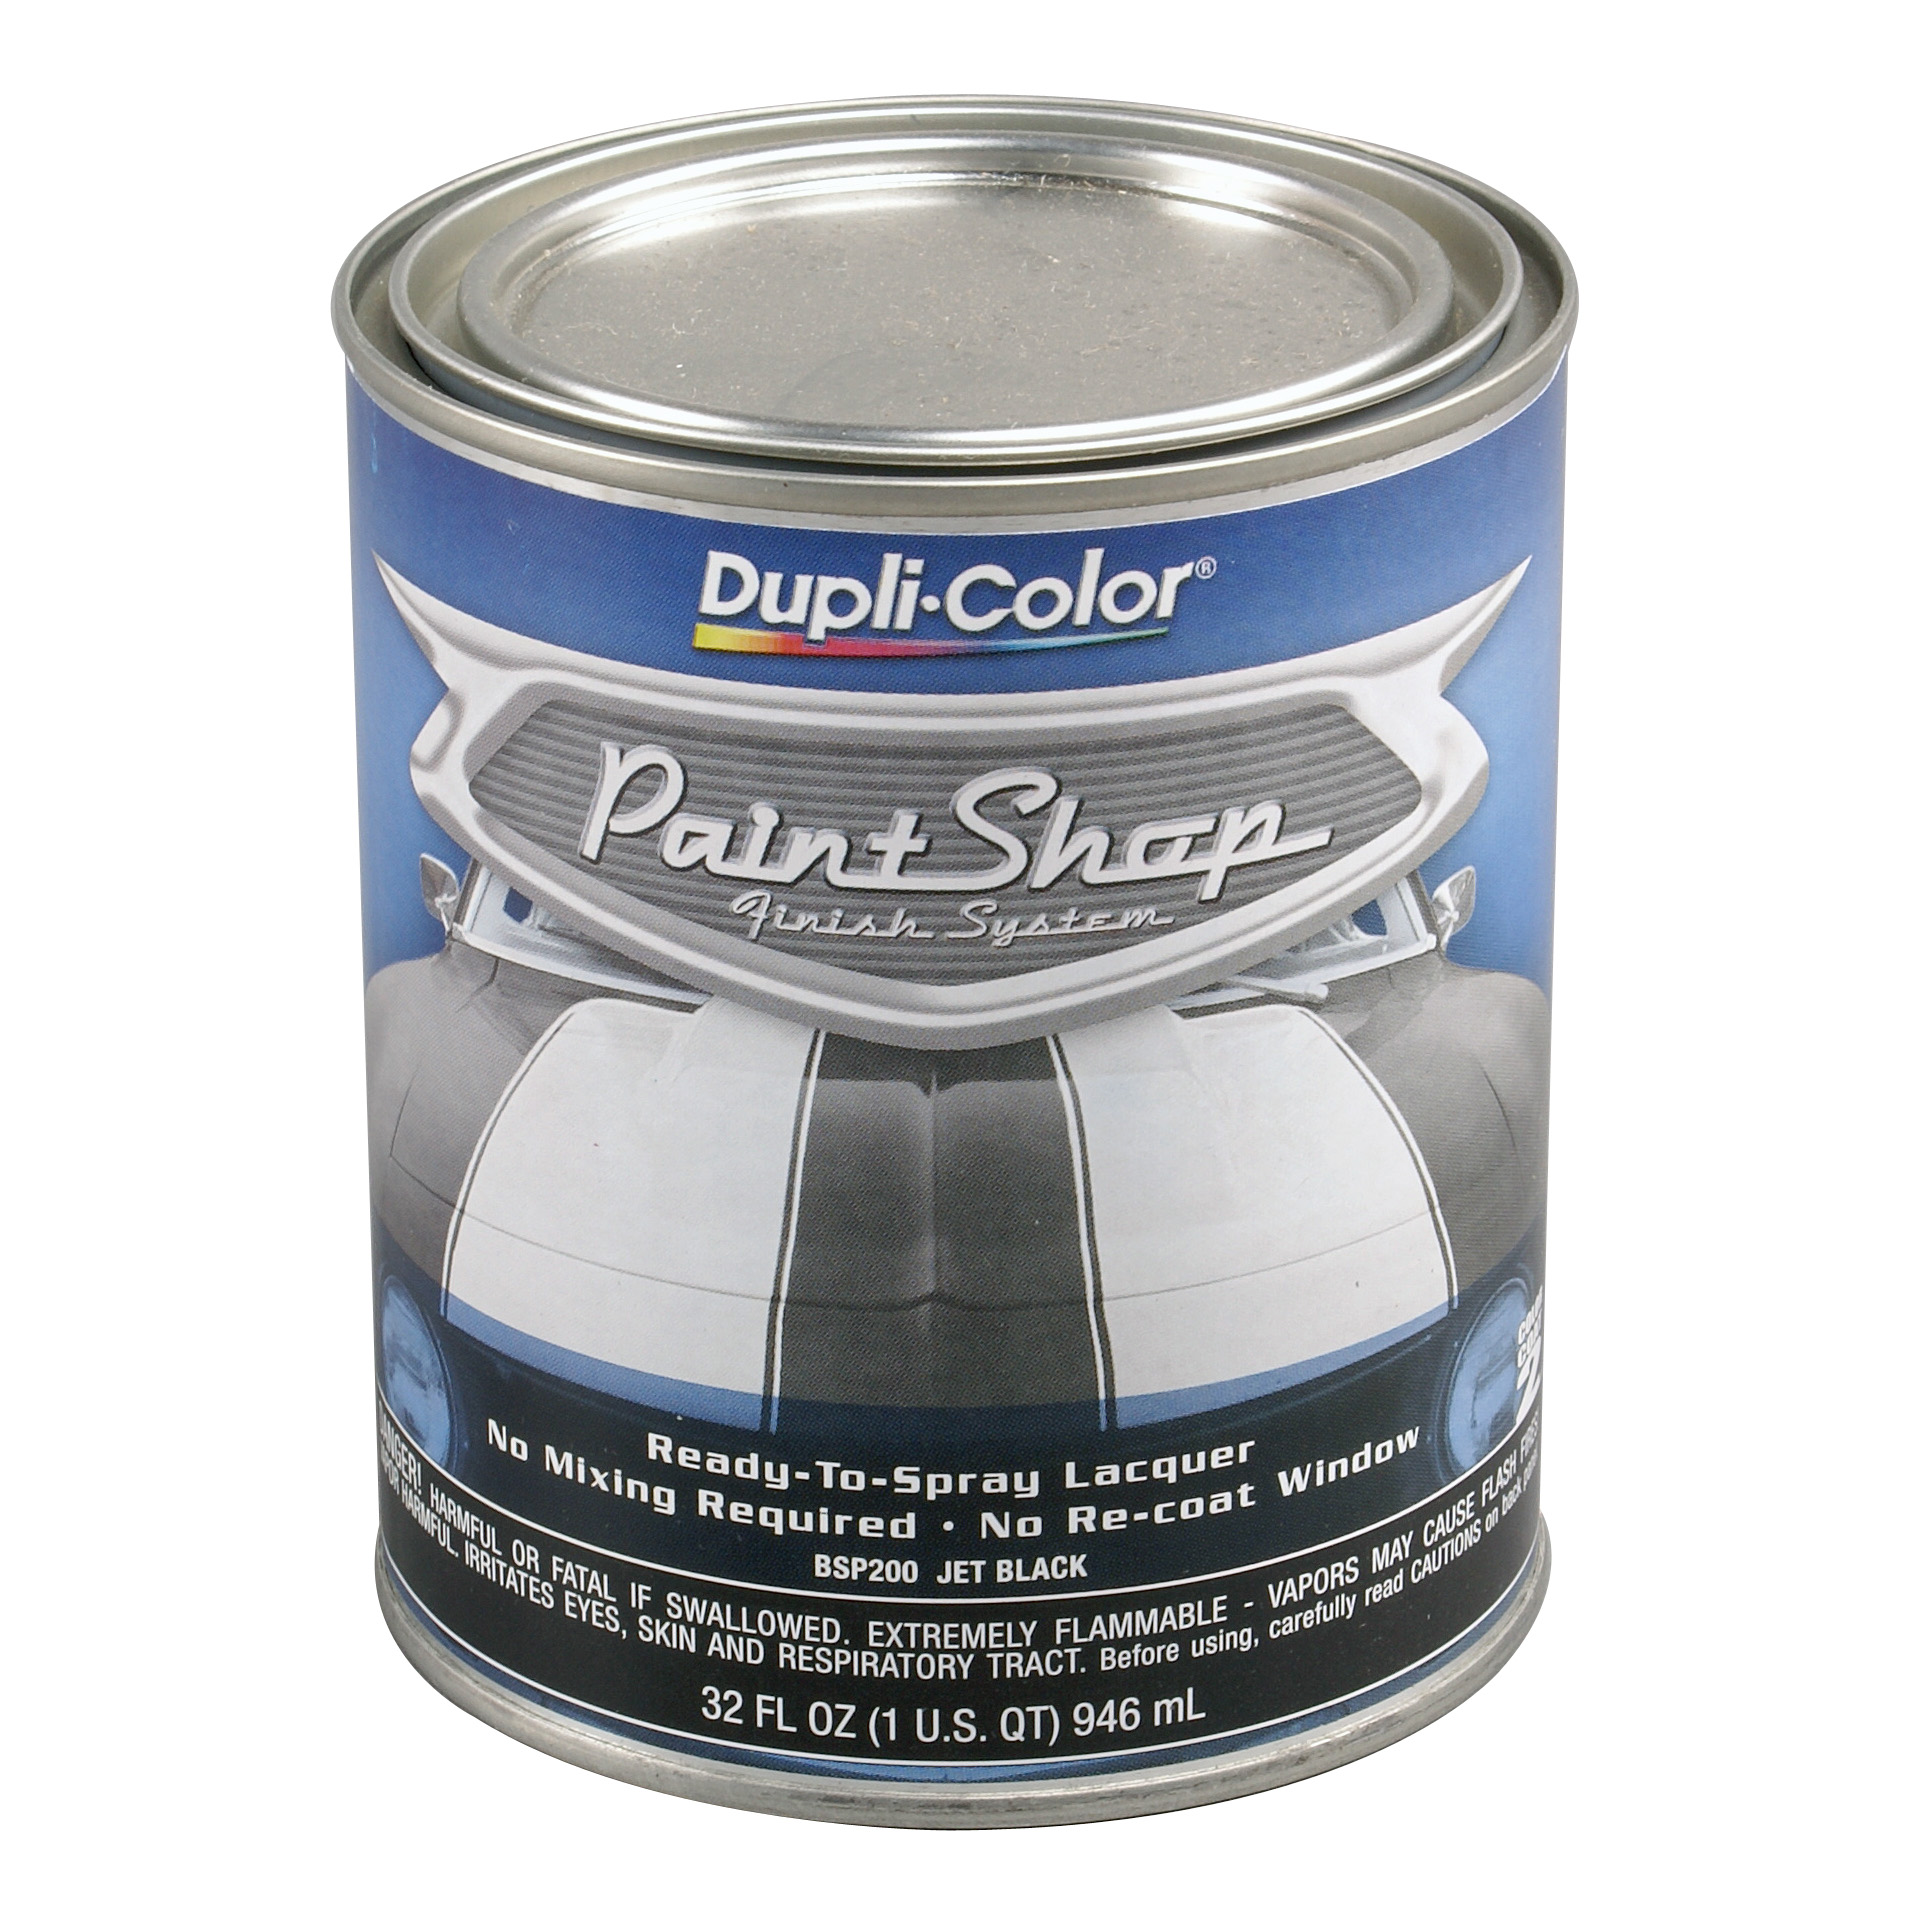 Dupli-Color Paint Shop Finish System, Gloss Jet Black